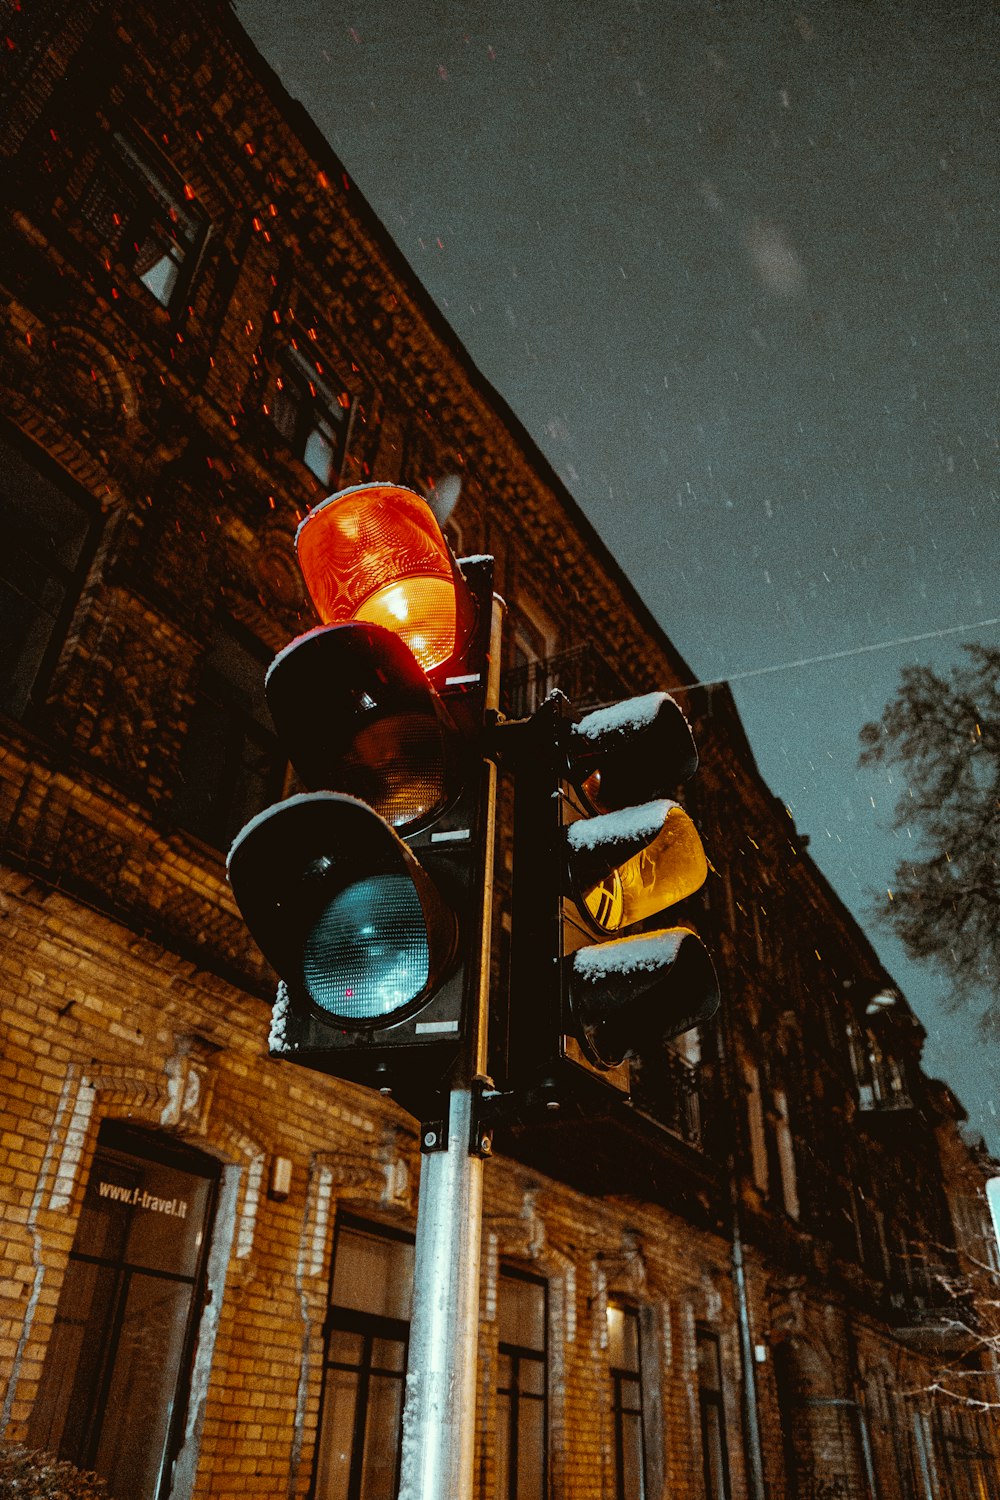 traffic light on red light